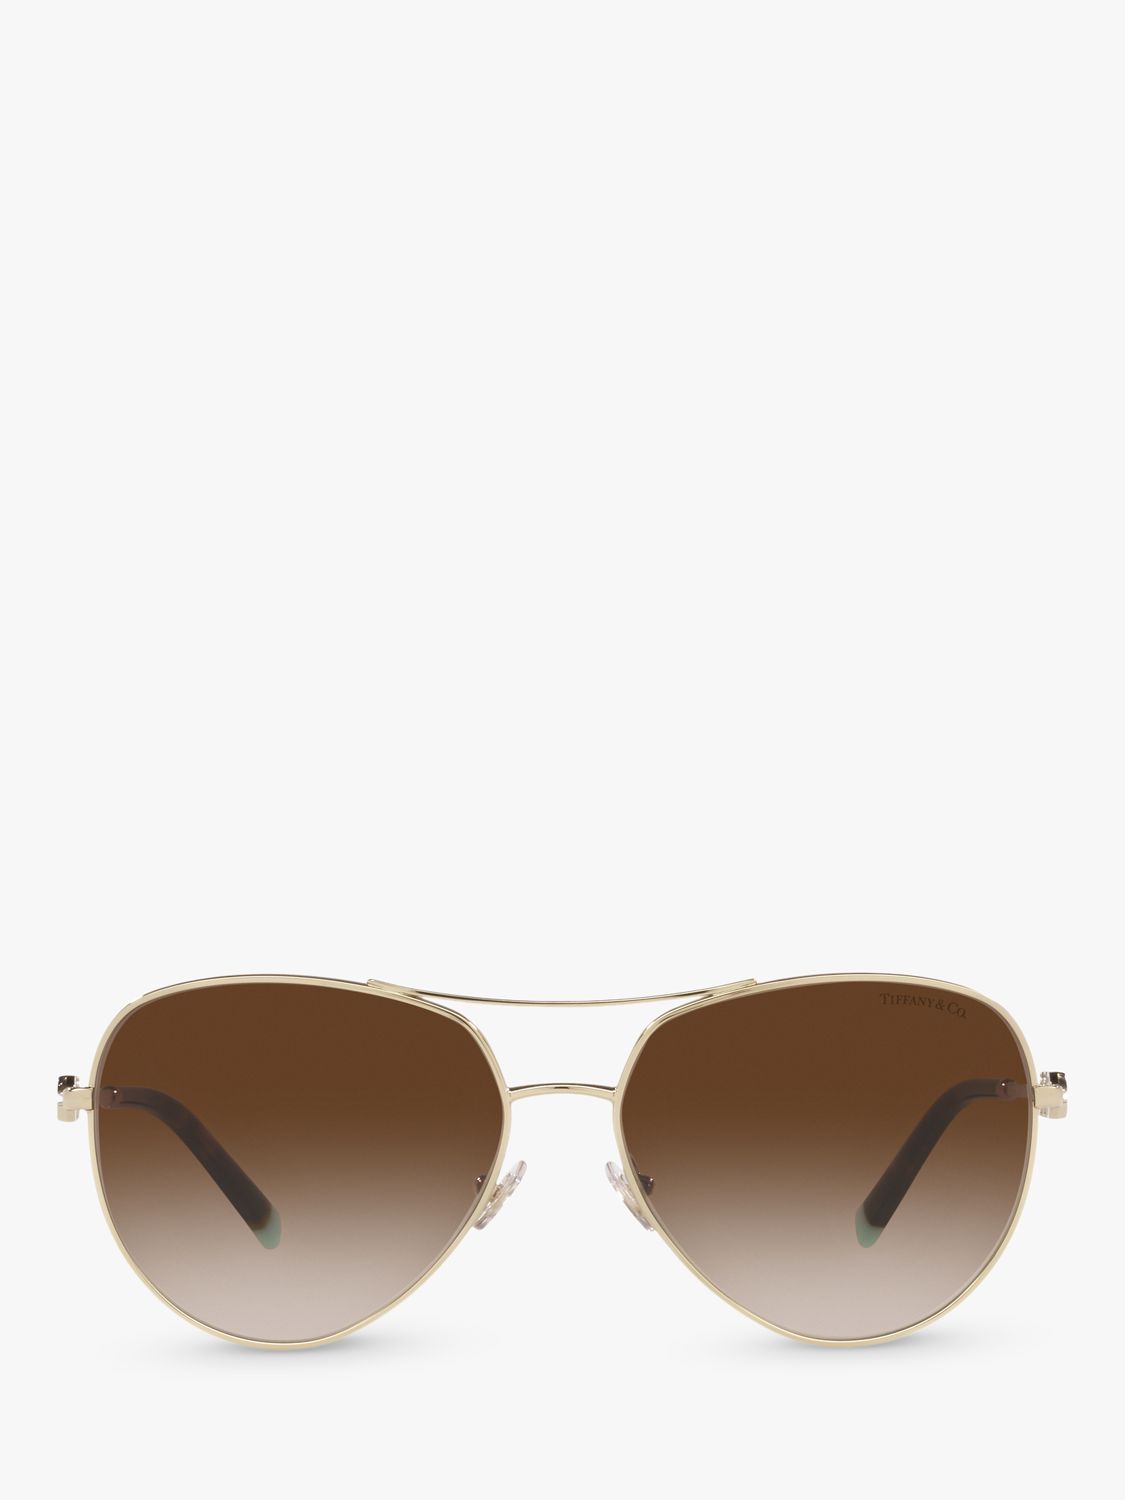 Tiffany & Co TF3083B Women's Pilot Sunglasses, Pale Gold/Brown Gradient